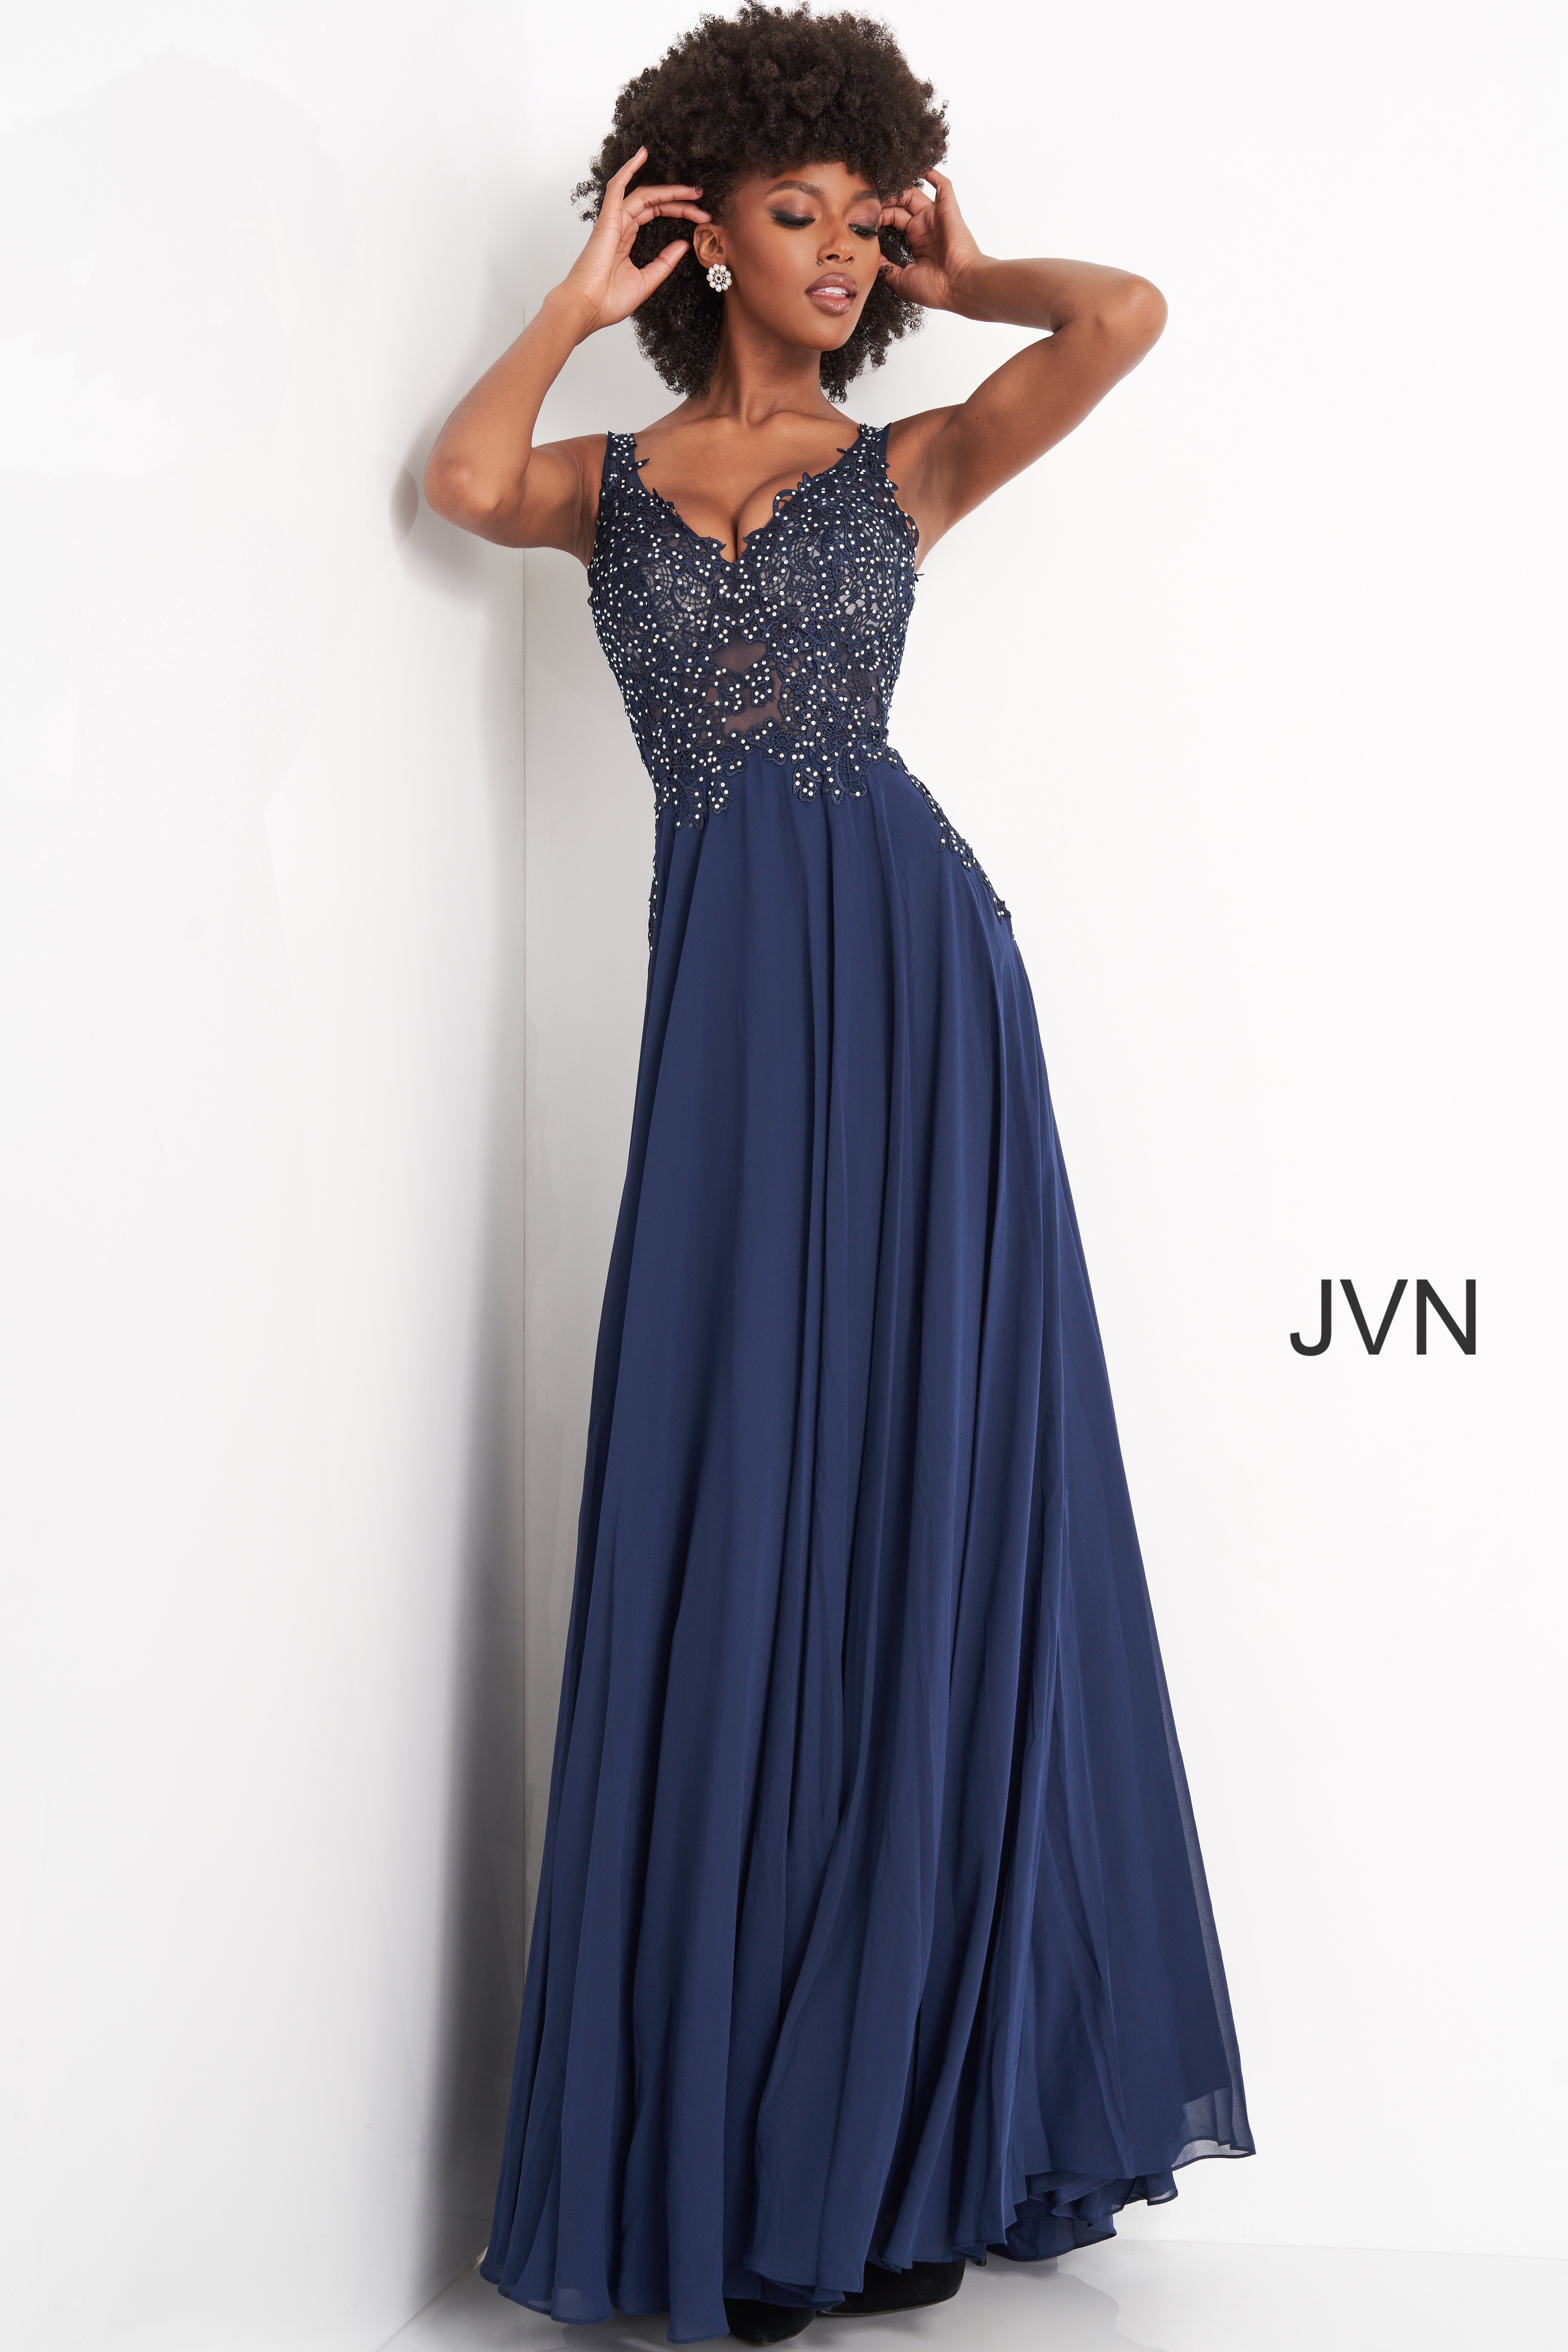 JVN02308 Dress | JVN Off White Sheer Embroidered Bodice Prom Dress